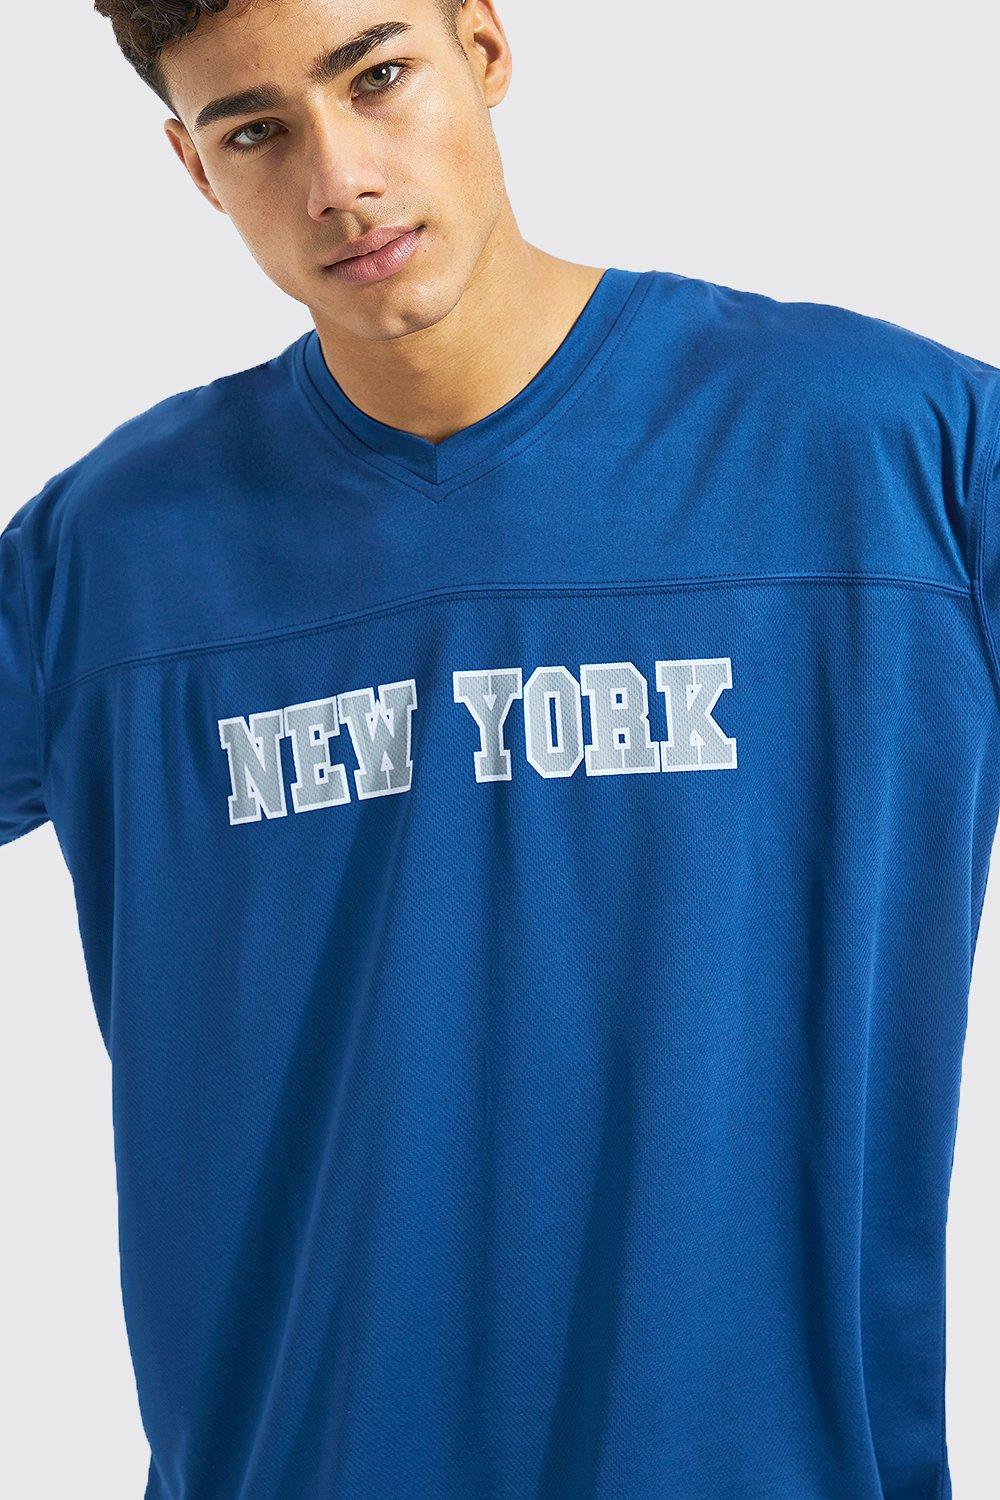 New York Yankees Boy Teddy 3/4 Navy Blue Sleeve Raglan